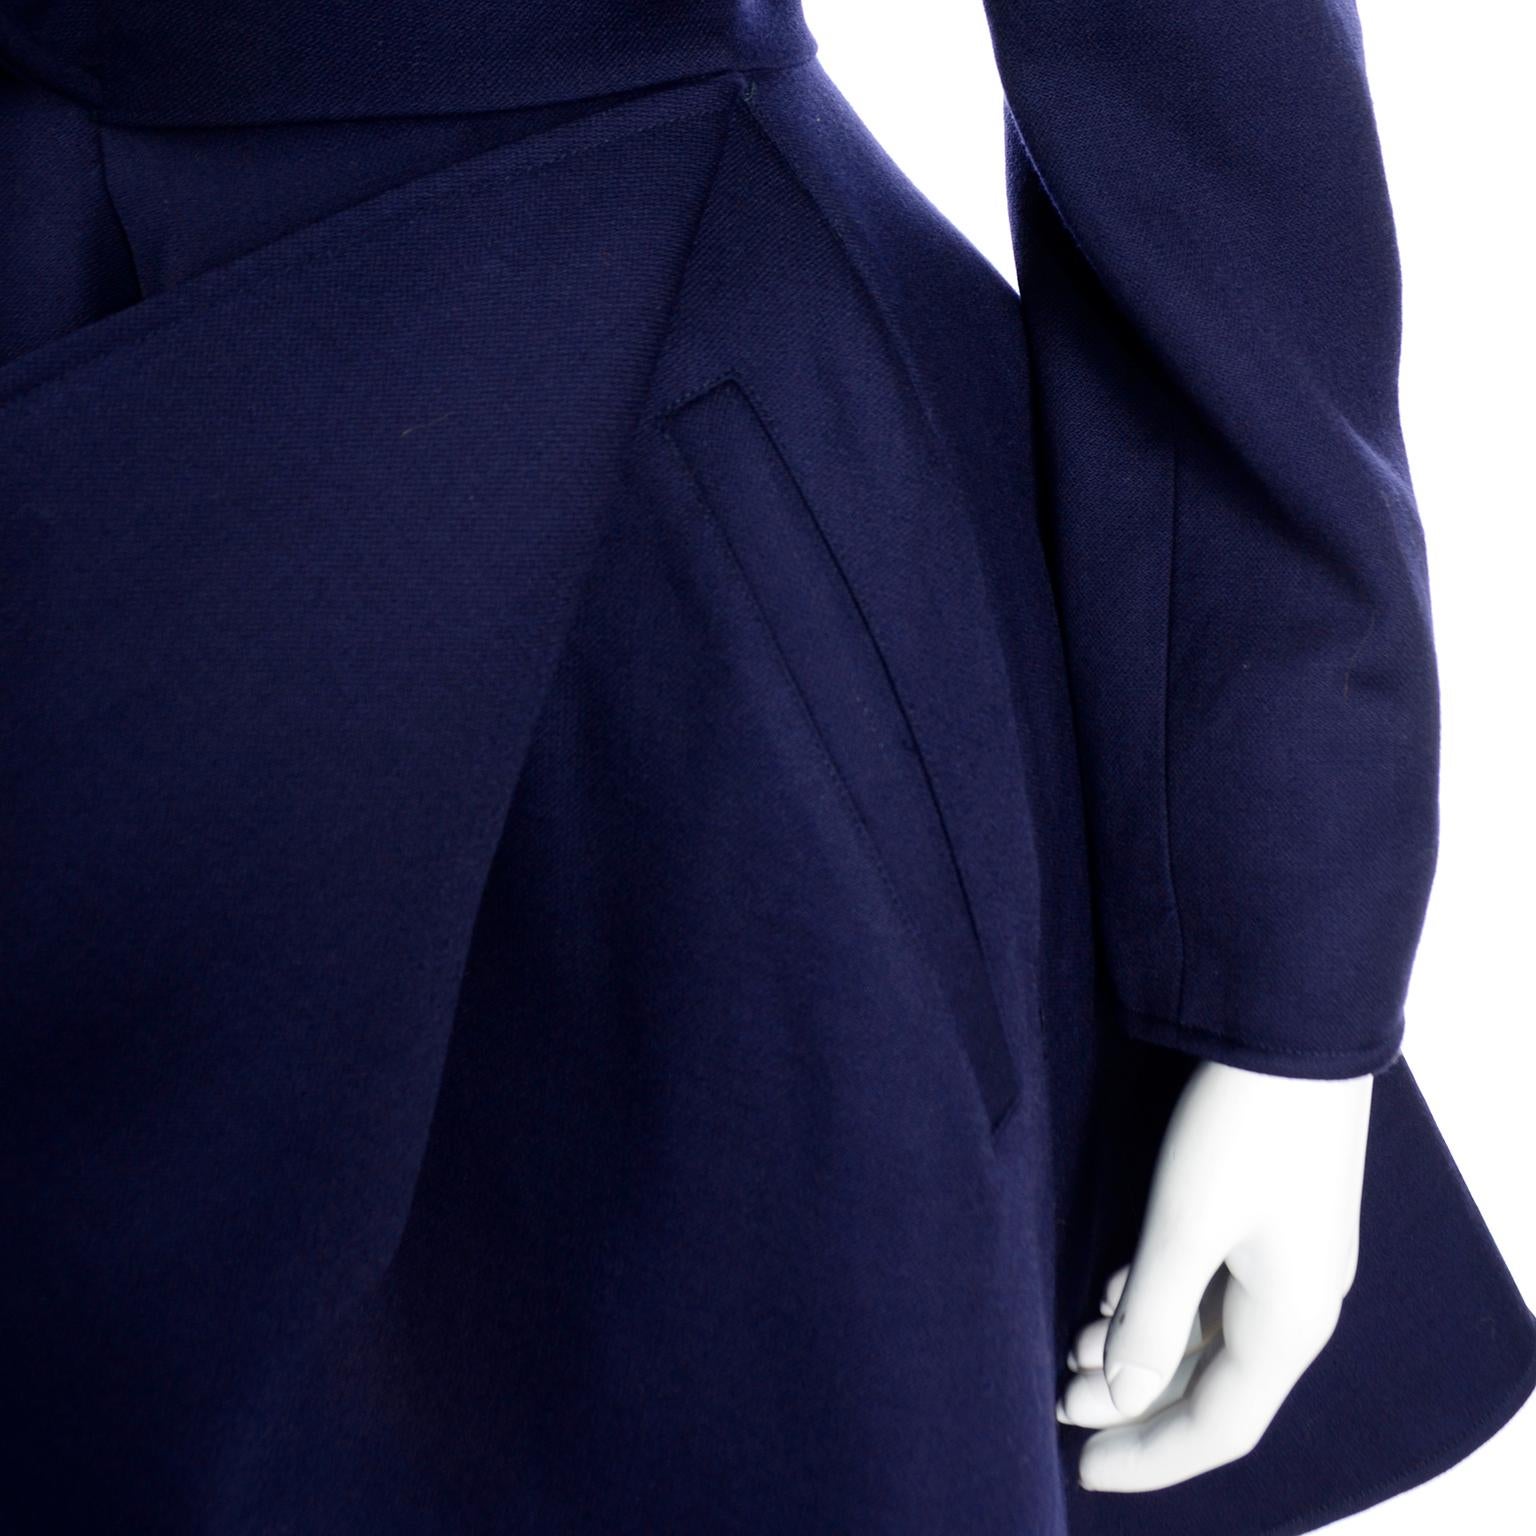 Claude Montana Vintage Layered Princess Coat in Royal Blue Wool 1